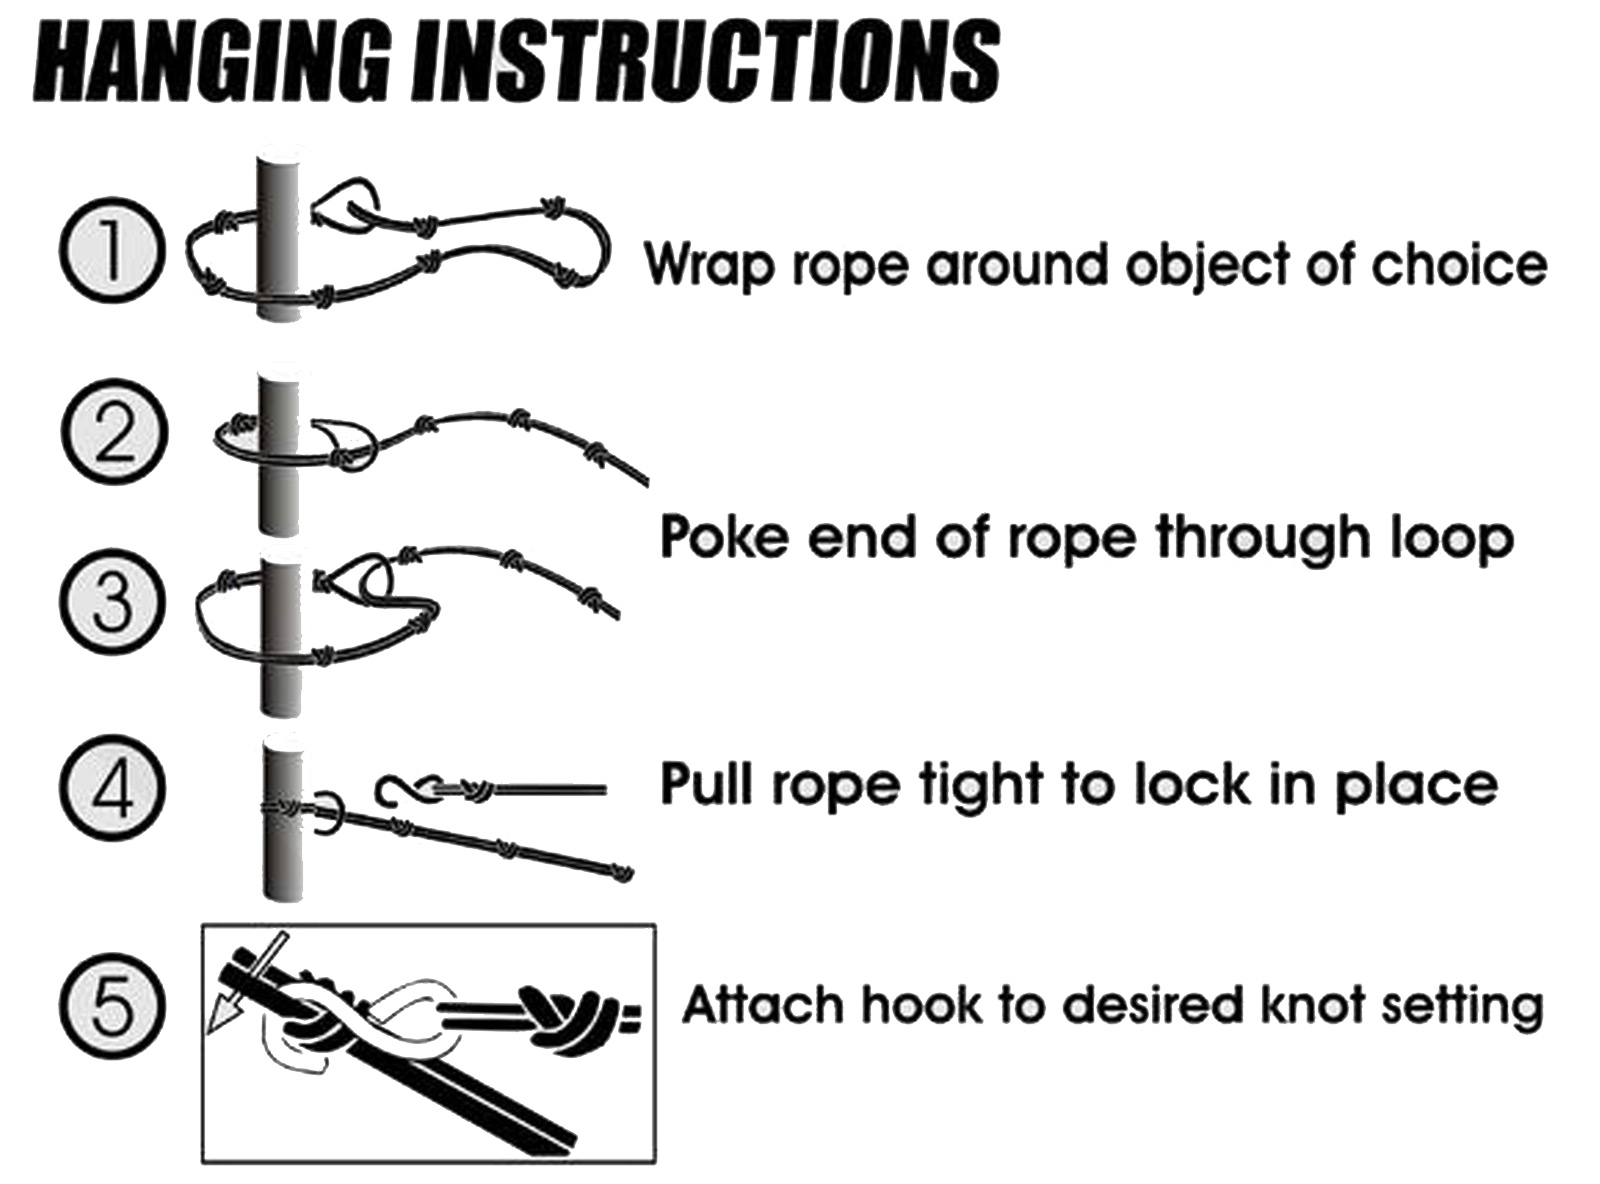 Hammock suspension straps